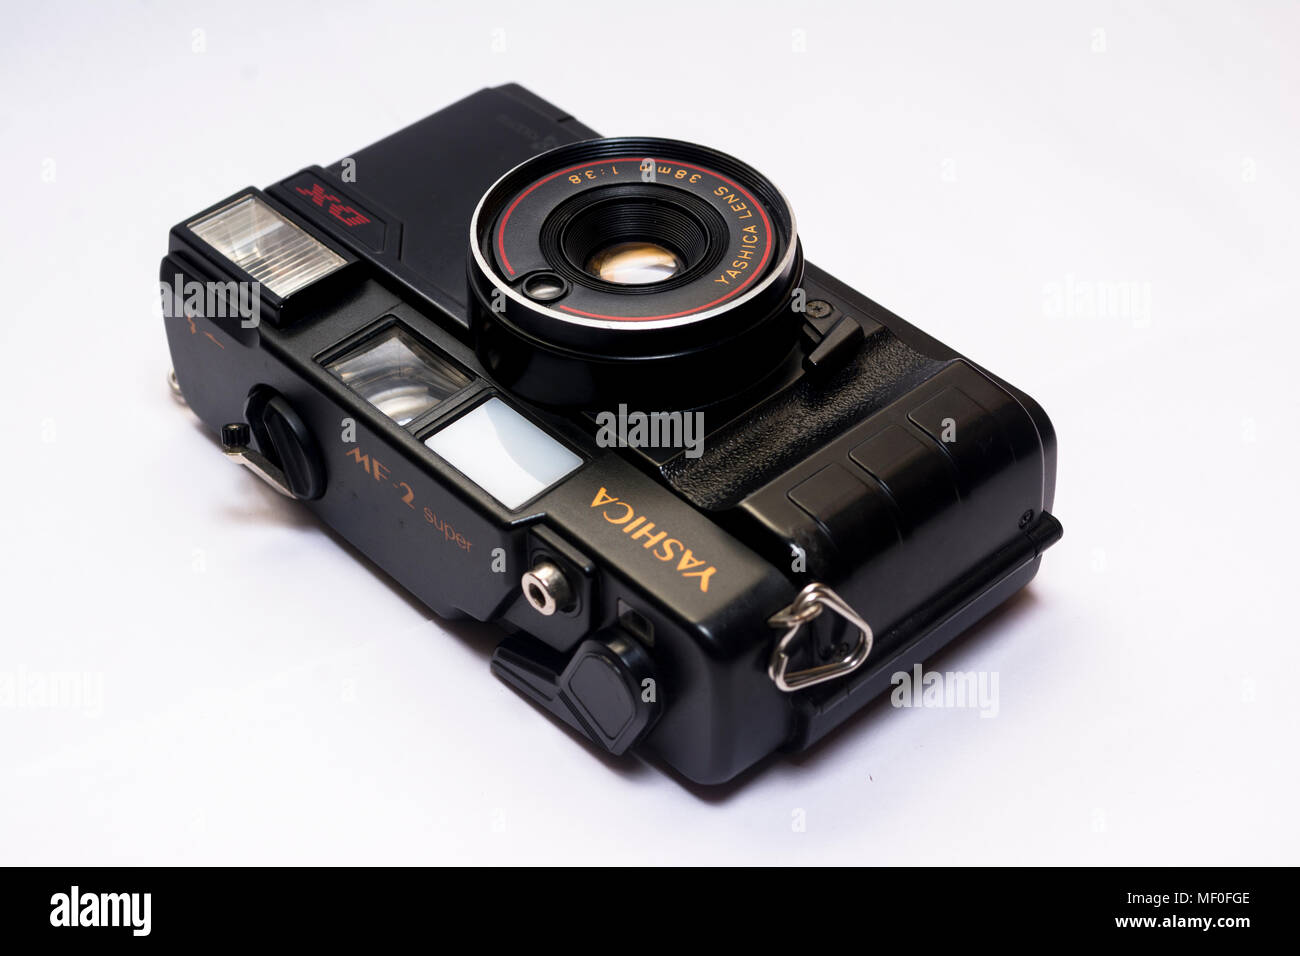 Yashica telecamera analogica in sfondo bianco Foto Stock